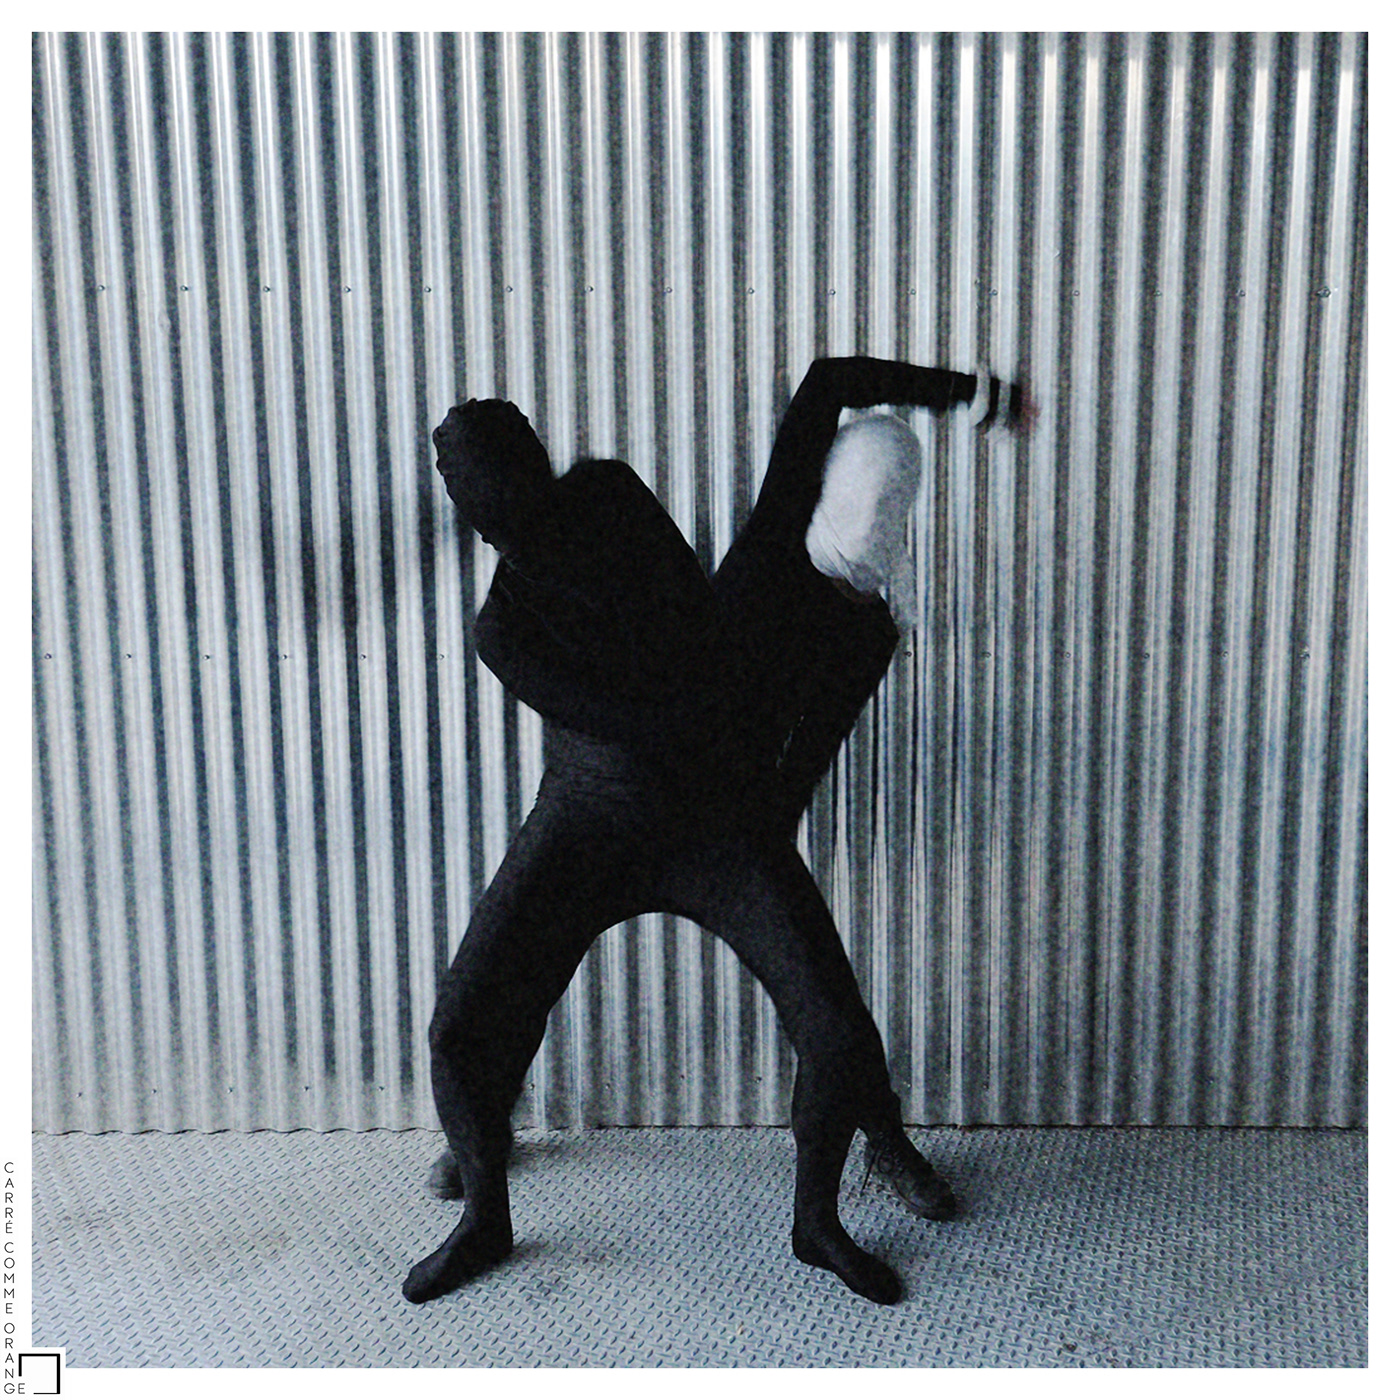 DANCE   disco mouvement Photography  model body camouflage danse contemporaine Farandole Performance